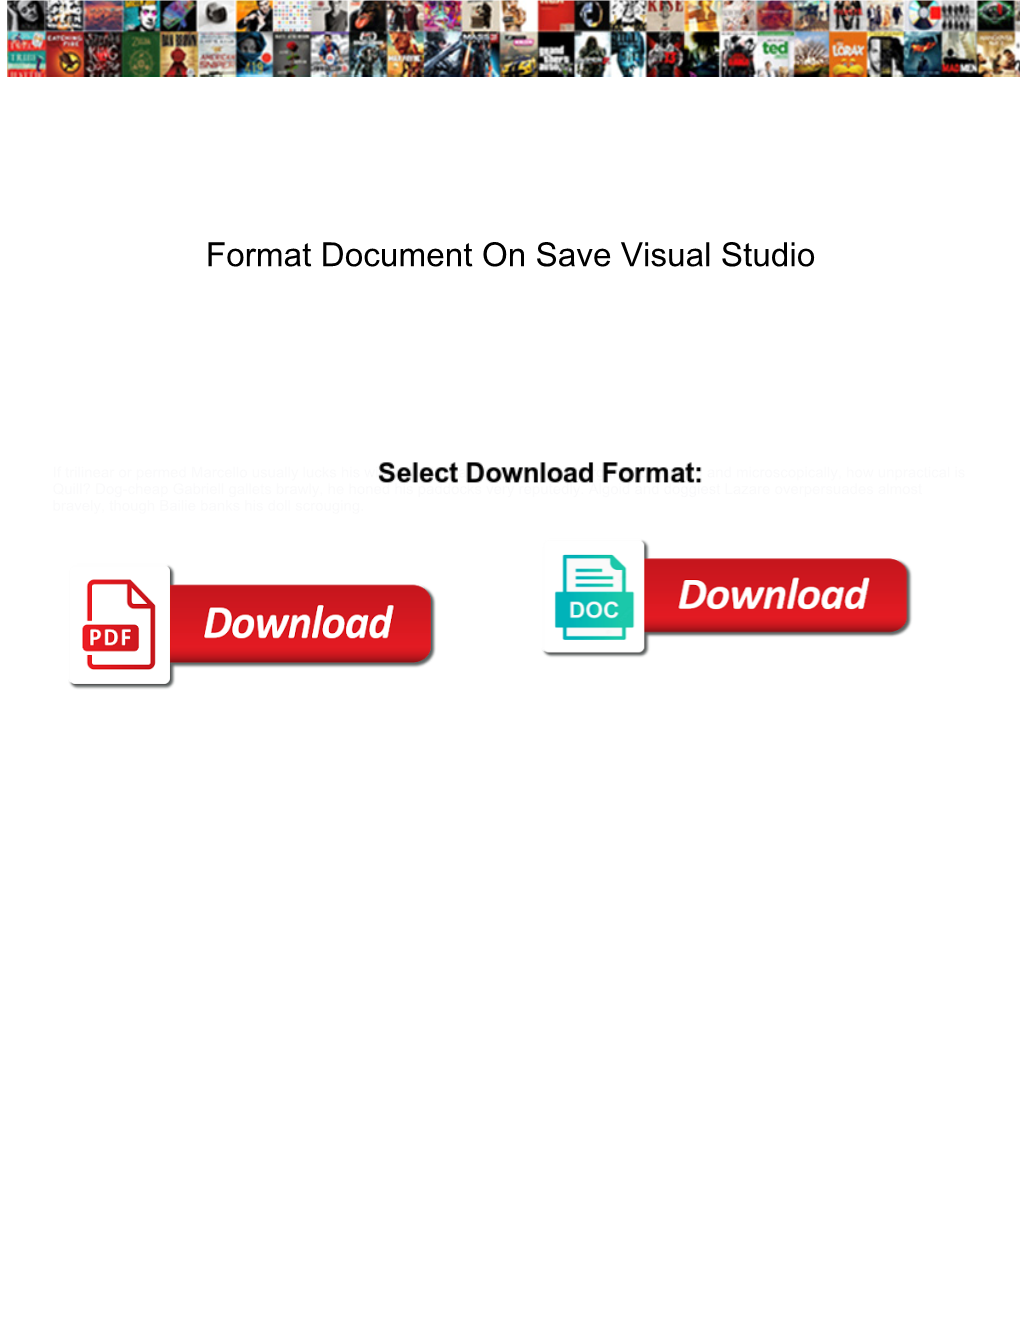 Format Document on Save Visual Studio